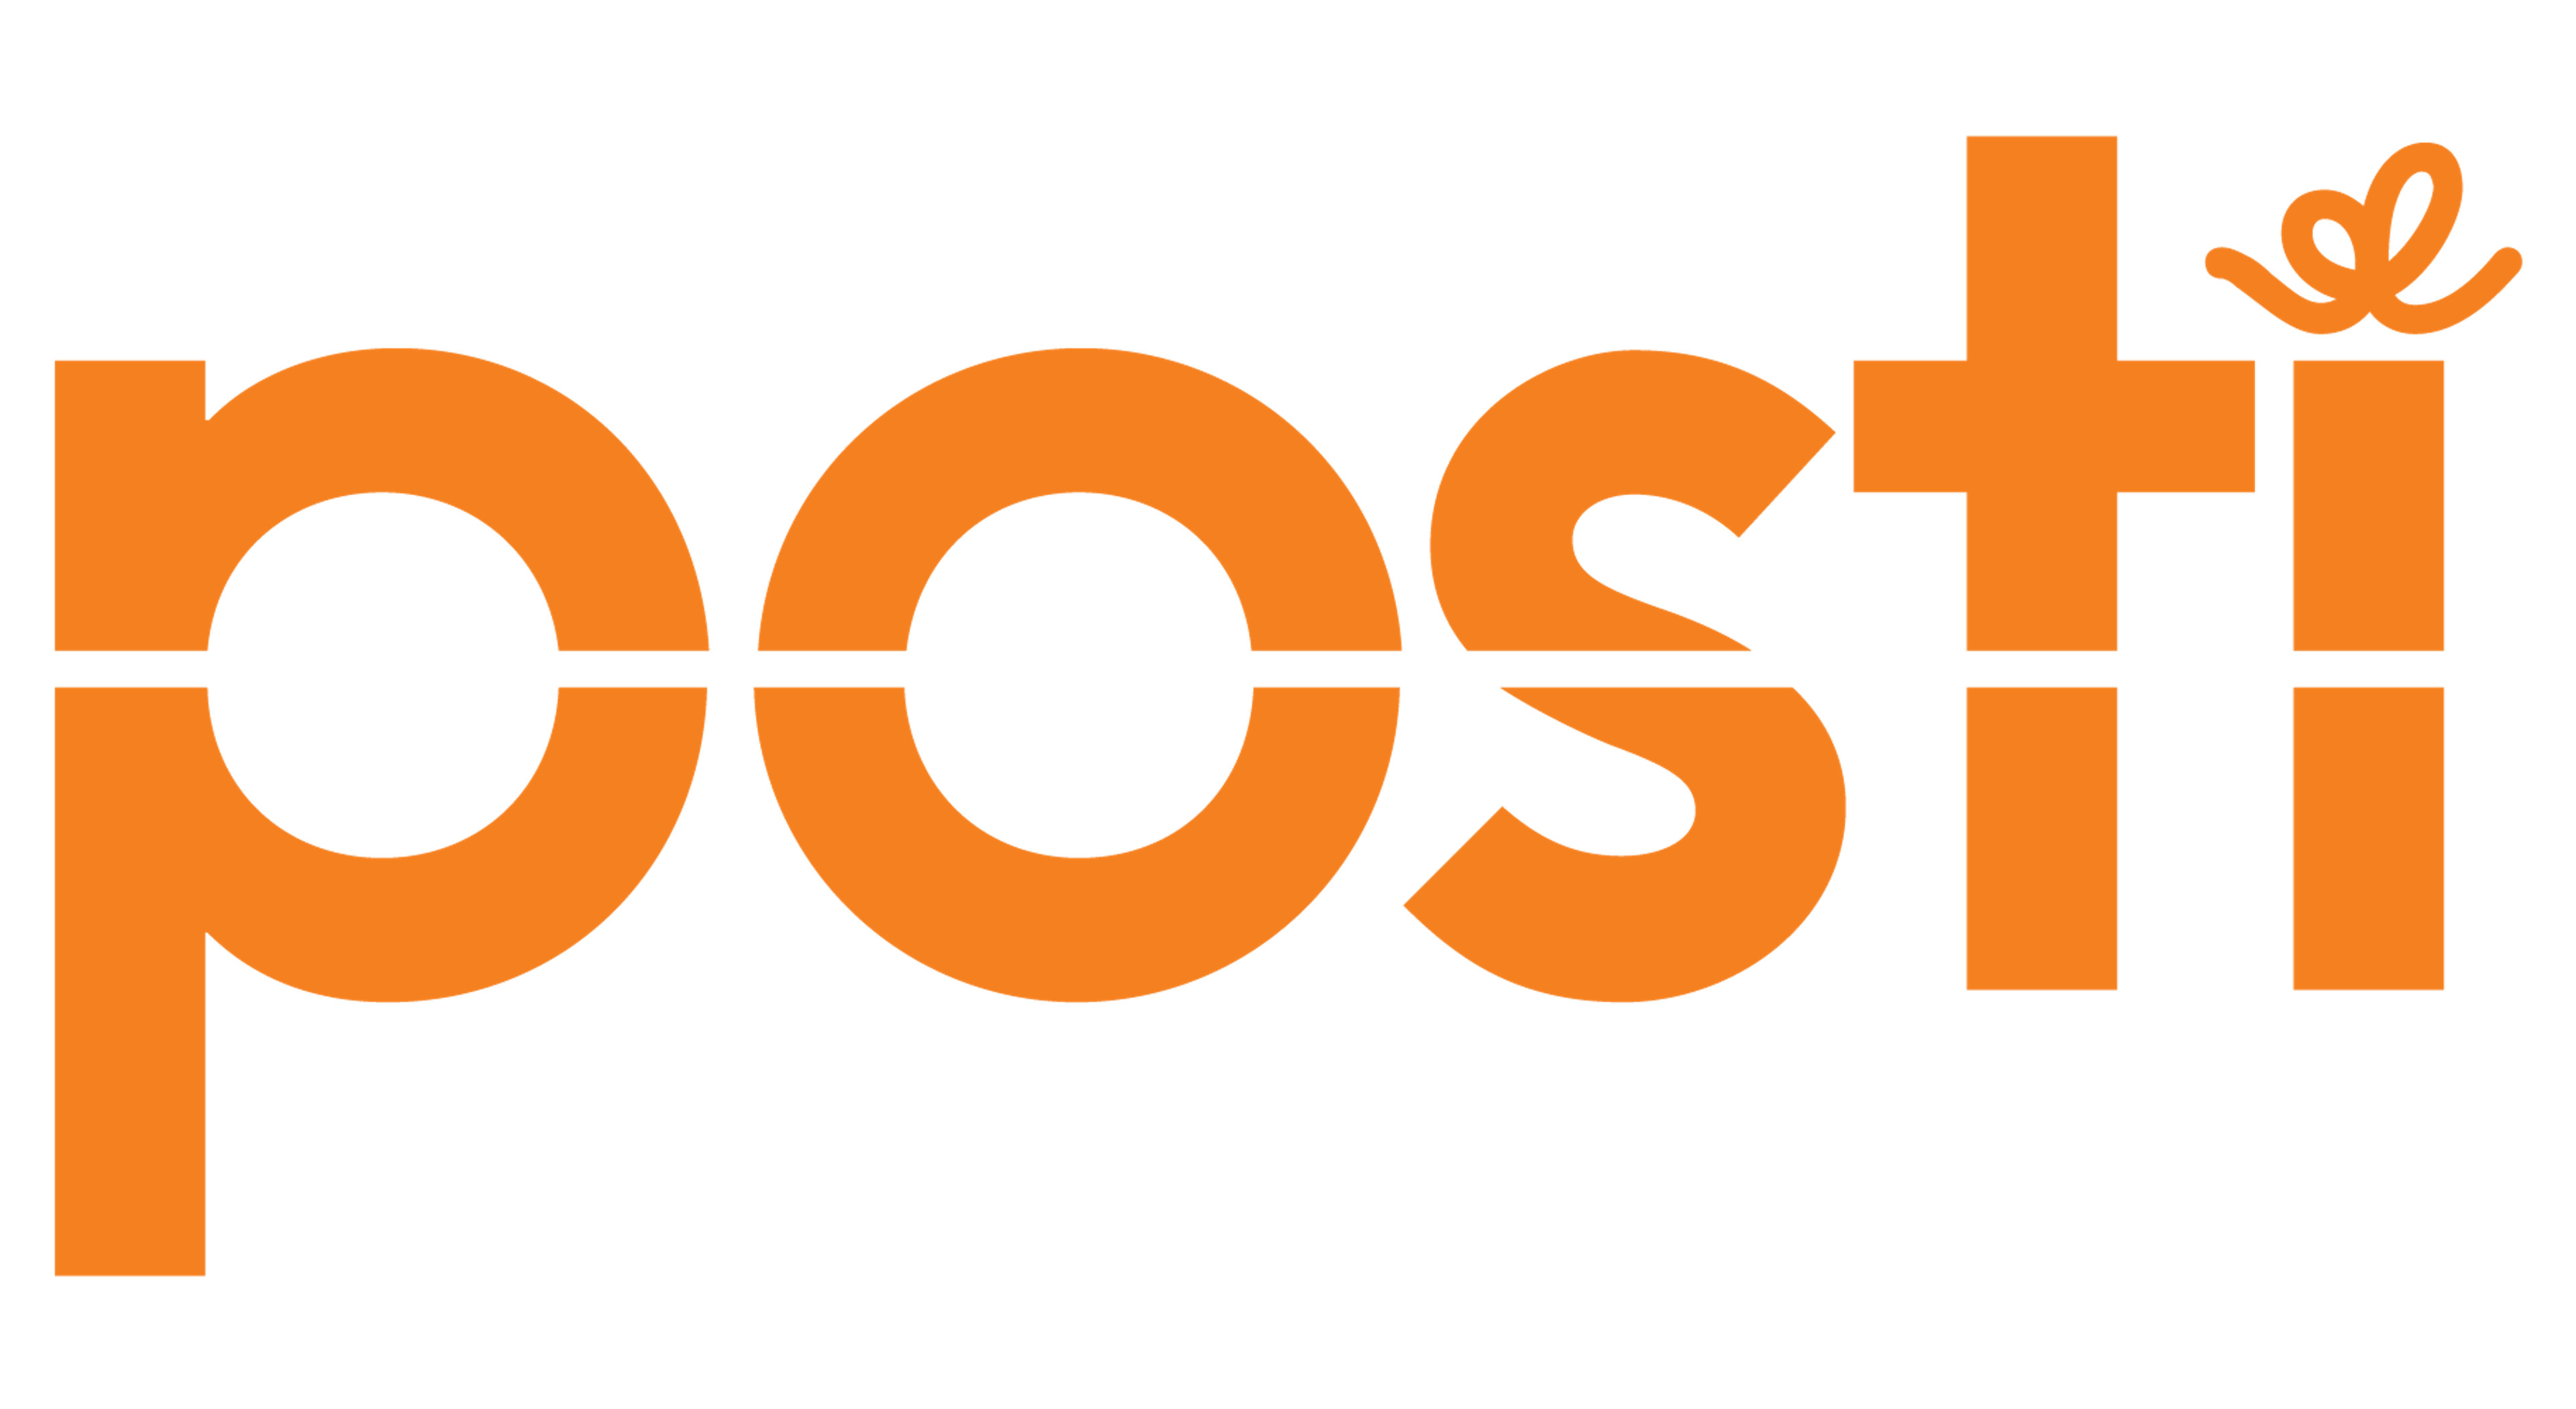 Posti, Finland, logo